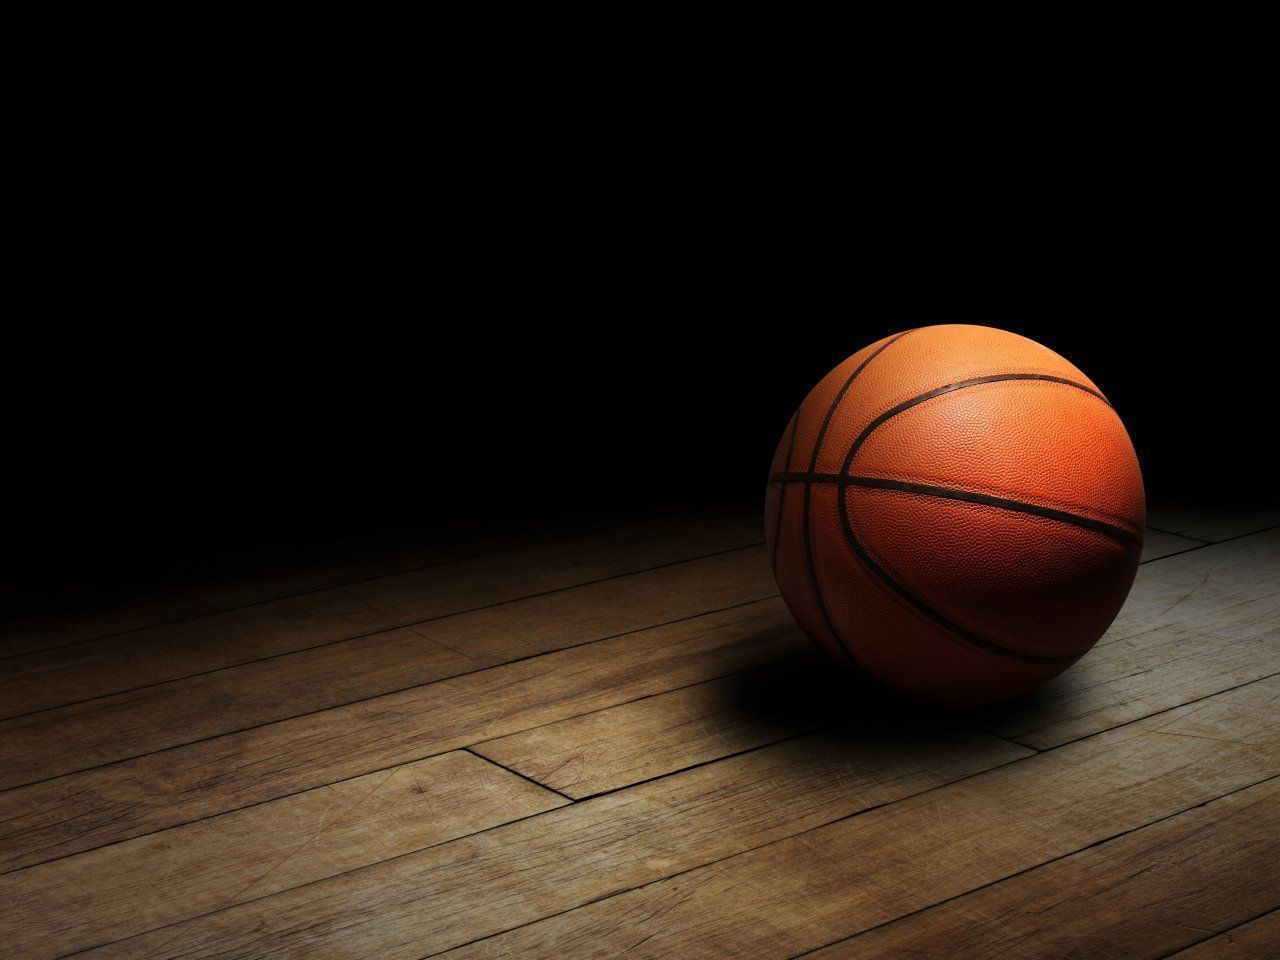 ballon de basket fond d'écran,basketball,basketball,terrain de basketball,bois dur,photographie de nature morte